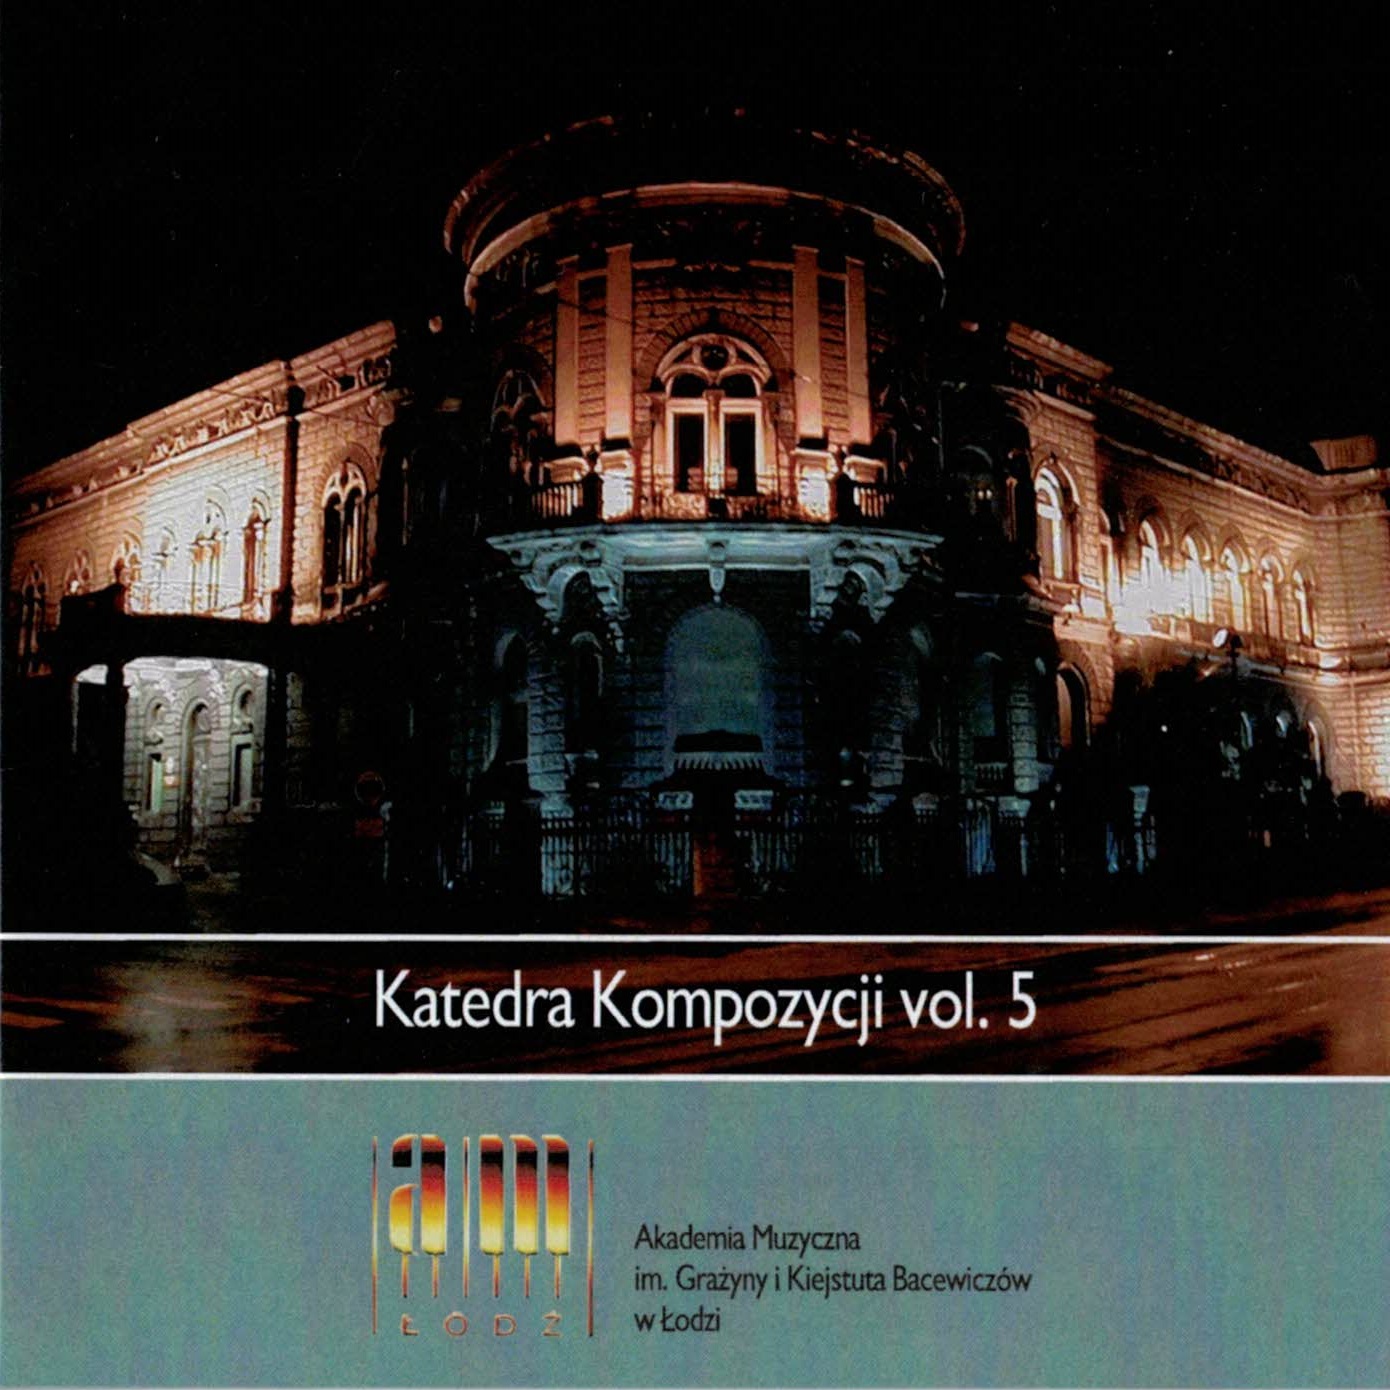 Katedra Kompozycji vol. 5